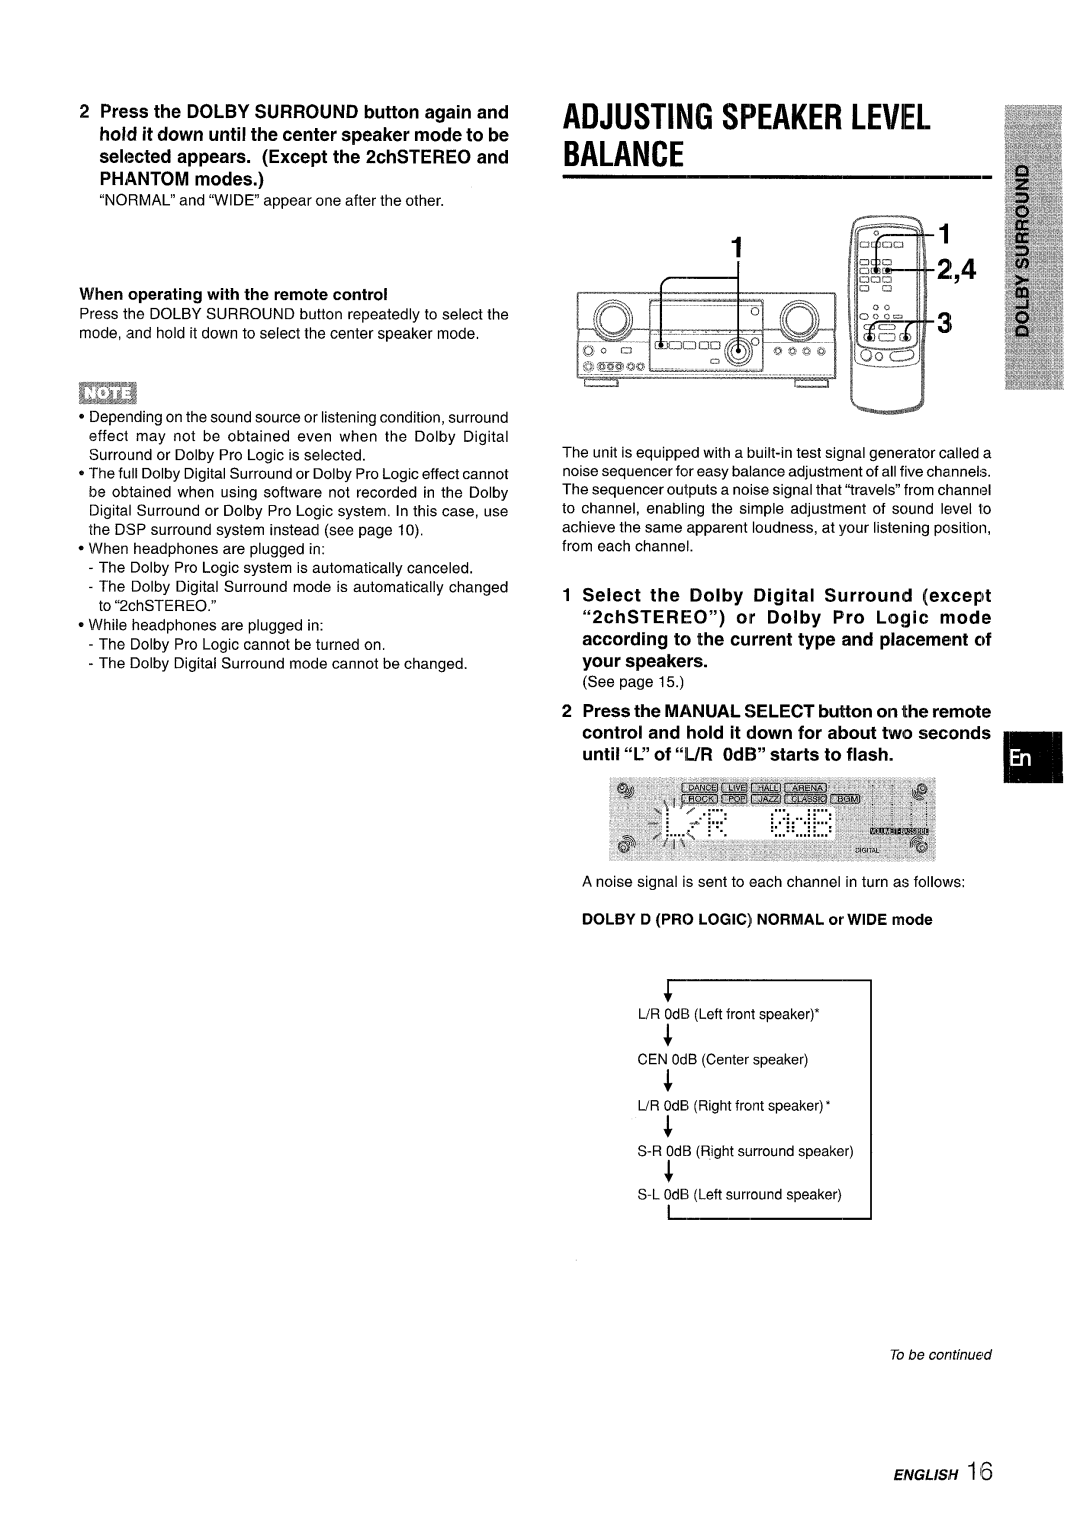 Sony AV-DV75 manual Adjusting Speaker Leviel Balance, r---l2!,4, Select the Dolby Digital Surround exceplt, Ee”A 